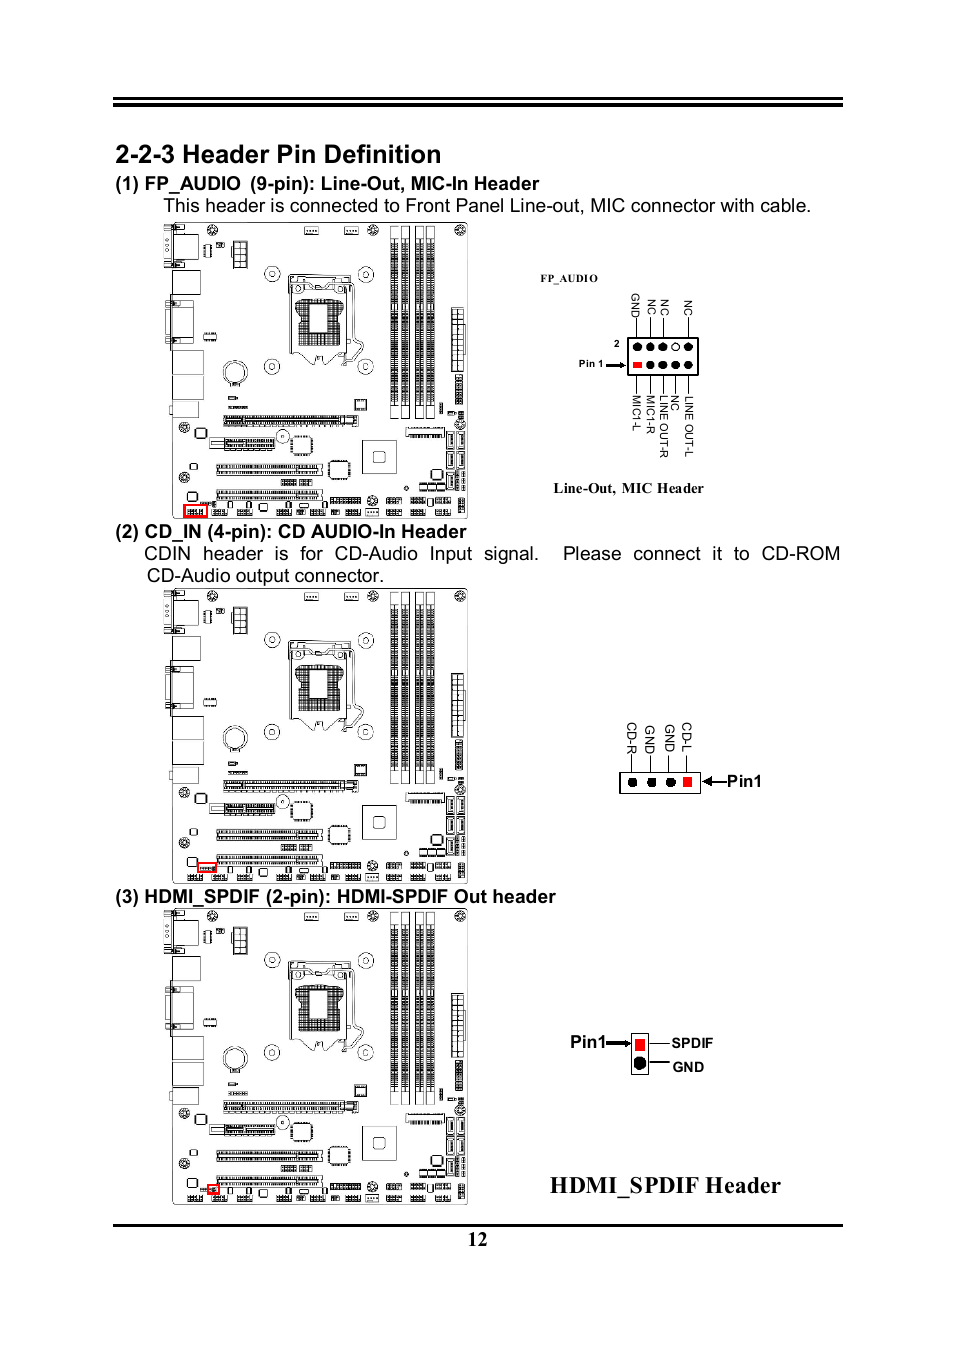 2-3 header pin definition, Hdmi_spdif header, 3) hdmi_spdif (2-pin):  hdmi-spdif out header | Jetway Computer NMF95-Q87 User Manual | Page 16 / 37